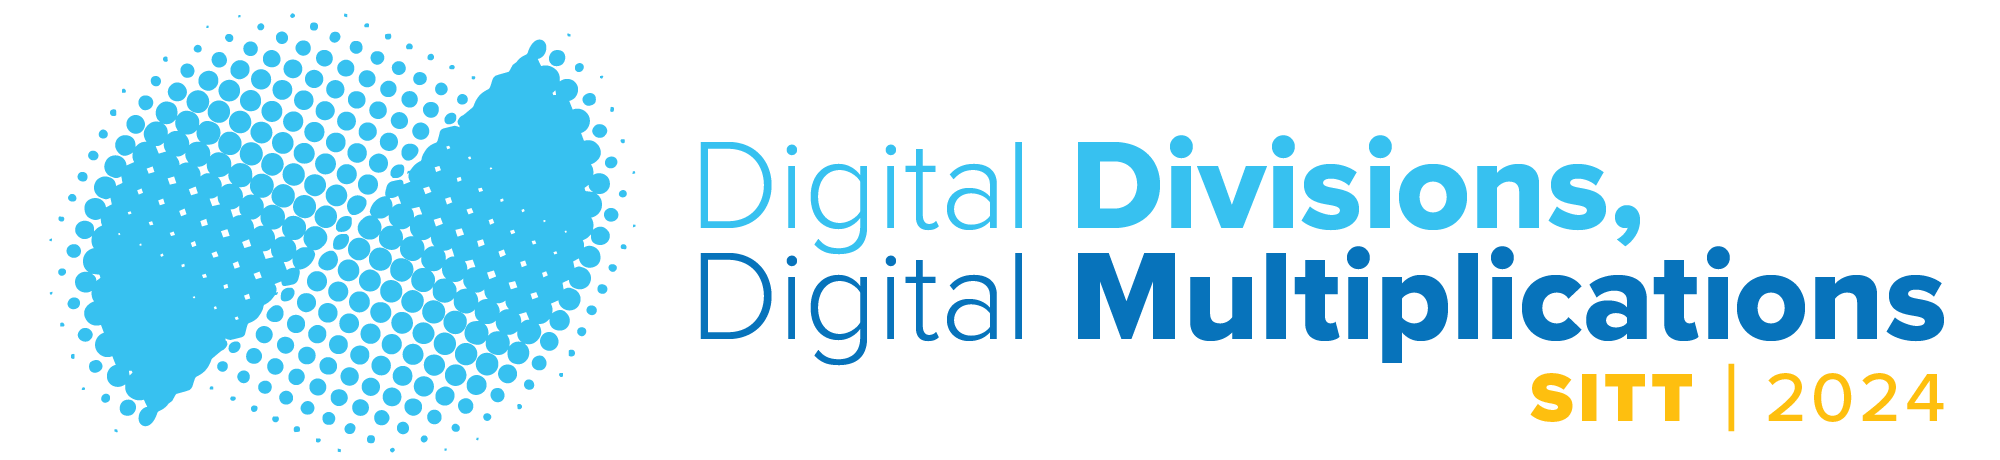 Digital Divisions, Digital Multiplications - theme for SITT 2024